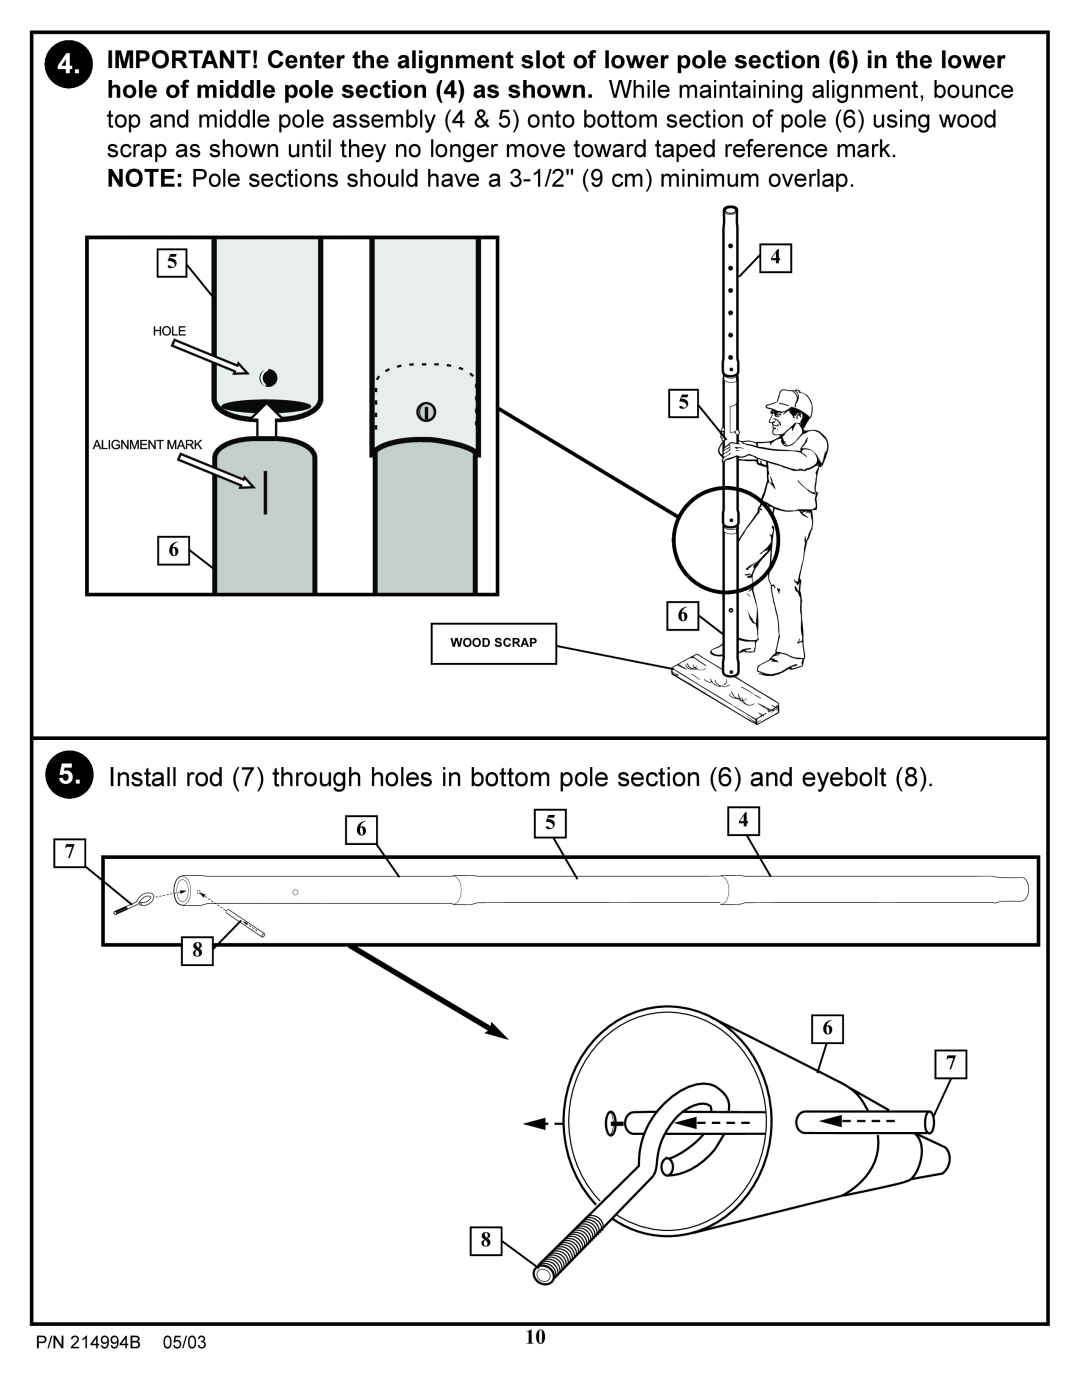 Spalding 214994B manual Install rod 7 through holes in bottom pole and eyebolt 